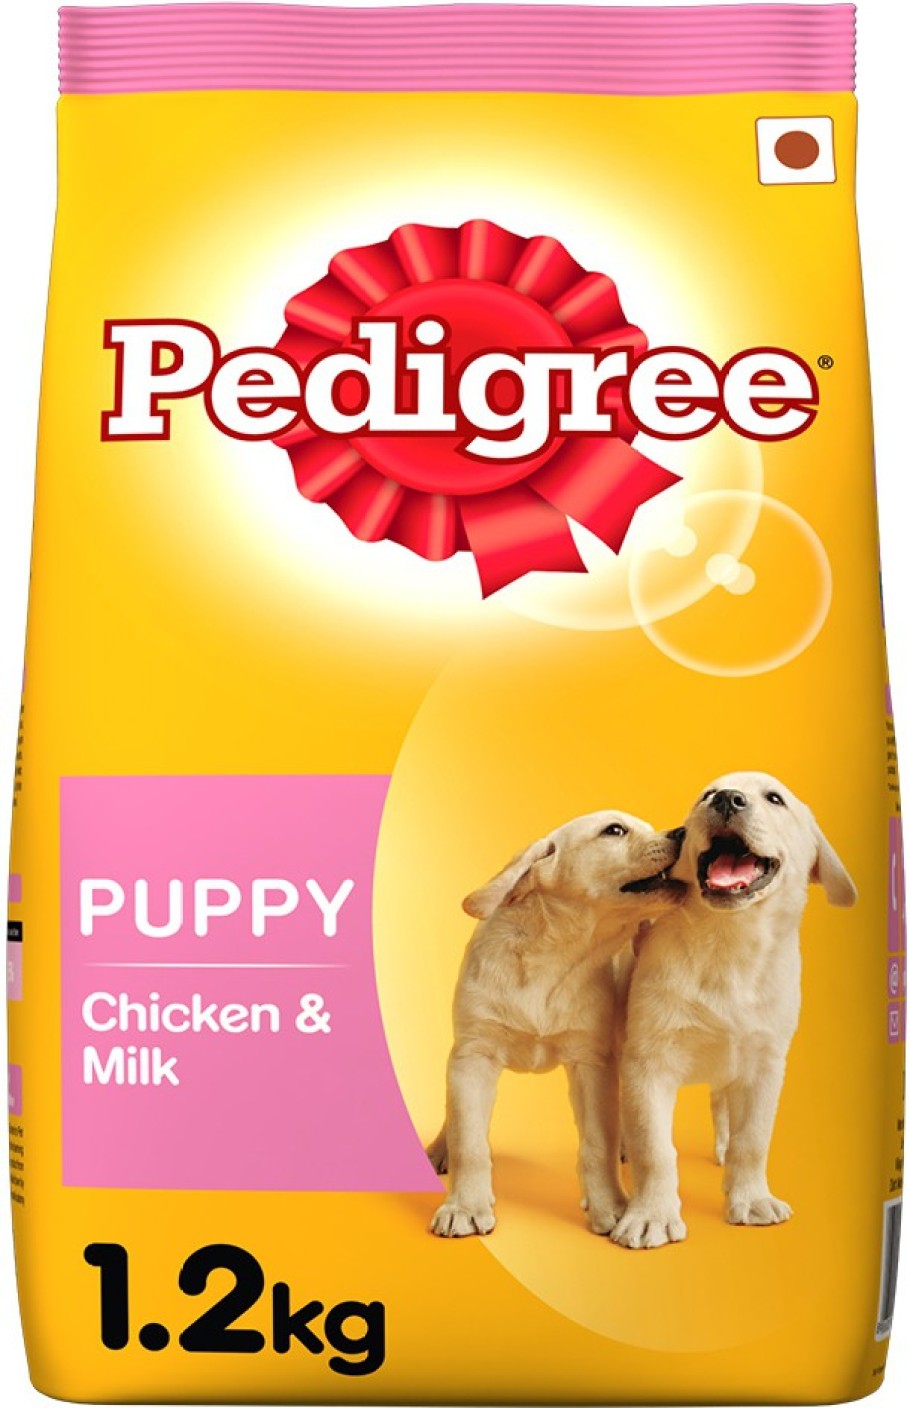 Pedigree Puppy Chicken, Milk Dog Food Price in India Buy